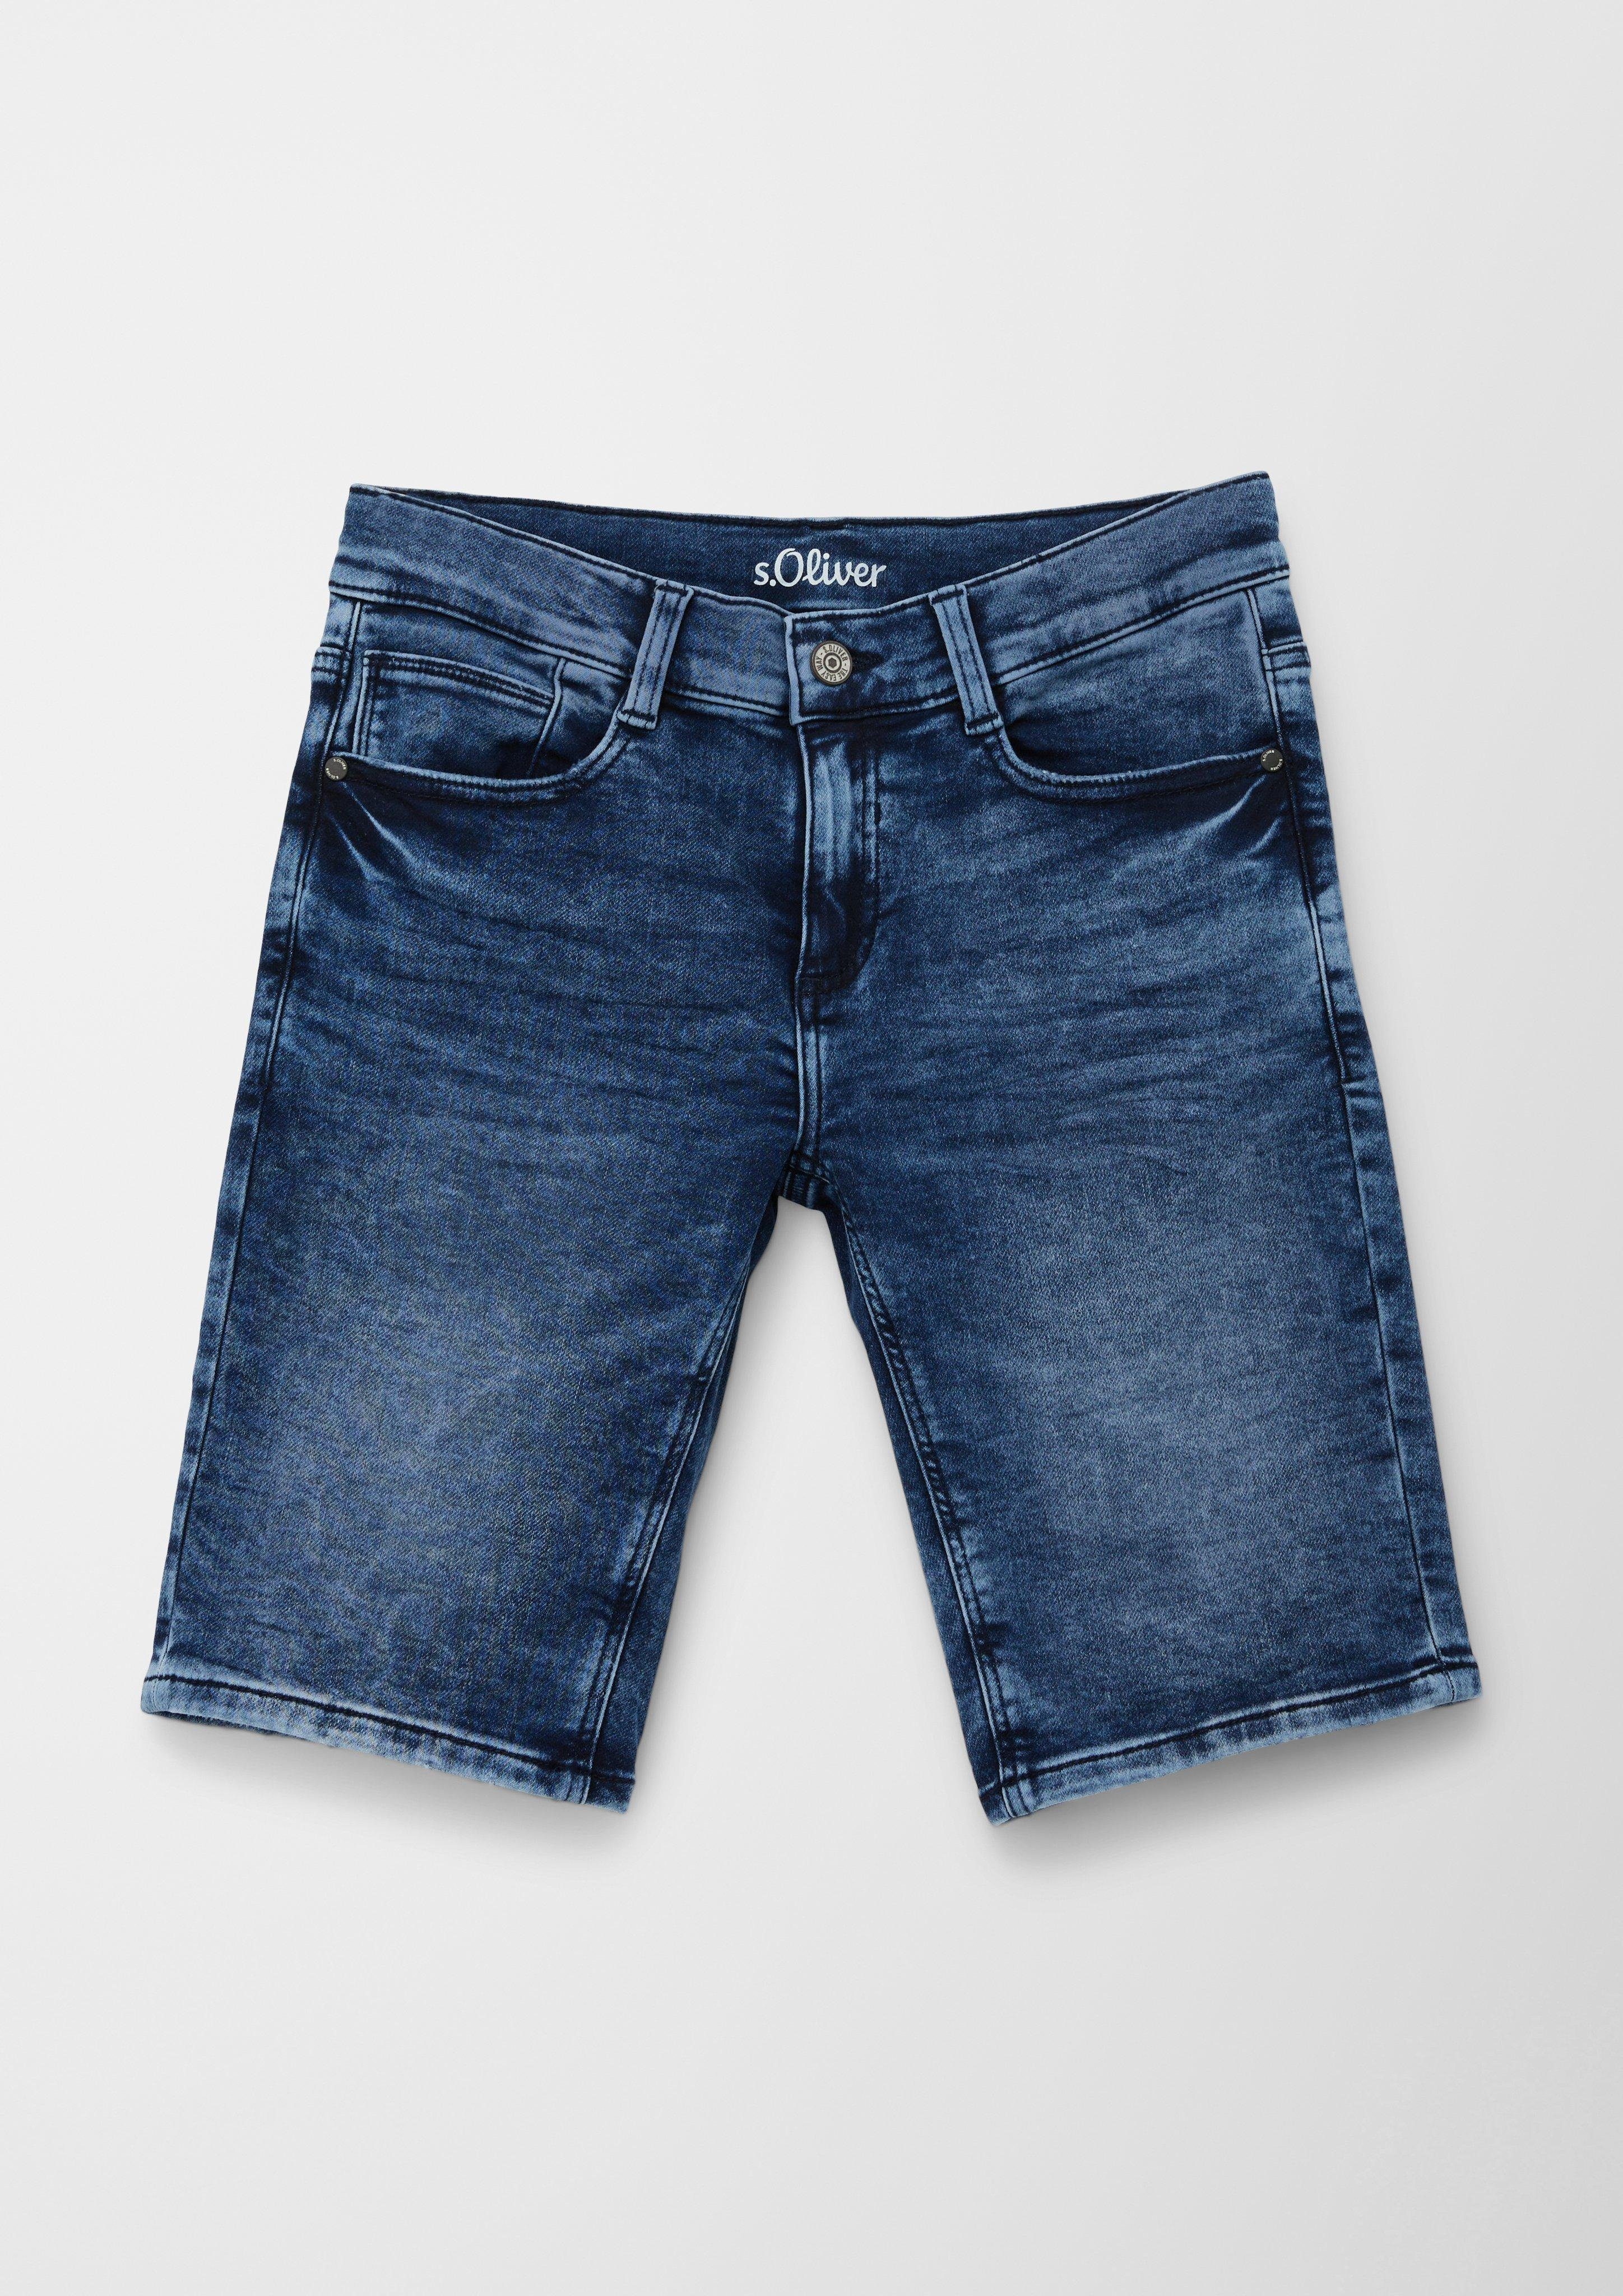 s.Oliver Jeansshorts Jeans-Bermuda Seattle / Regular Fit / Mid Rise / Slim Leg Waschung, Destroyes